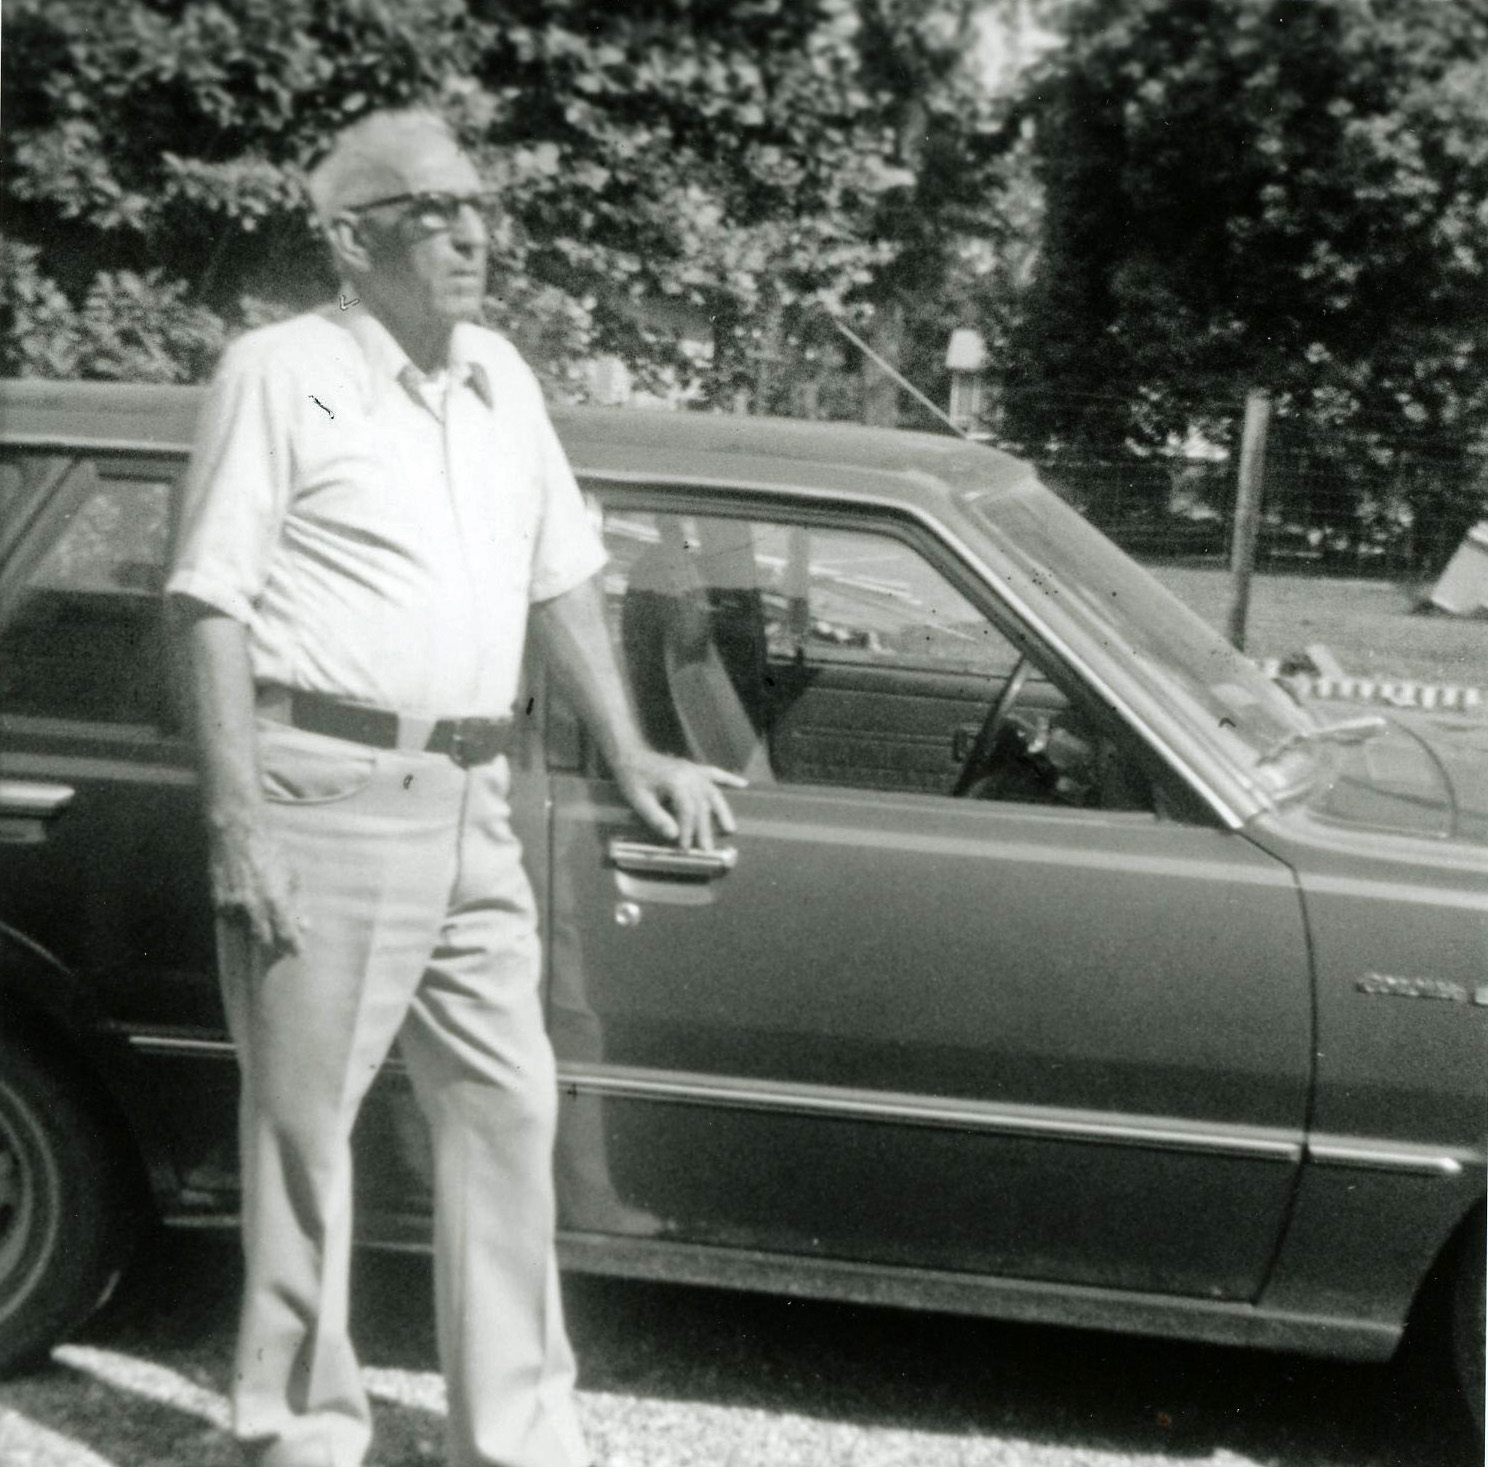 a man standing next to a parked car